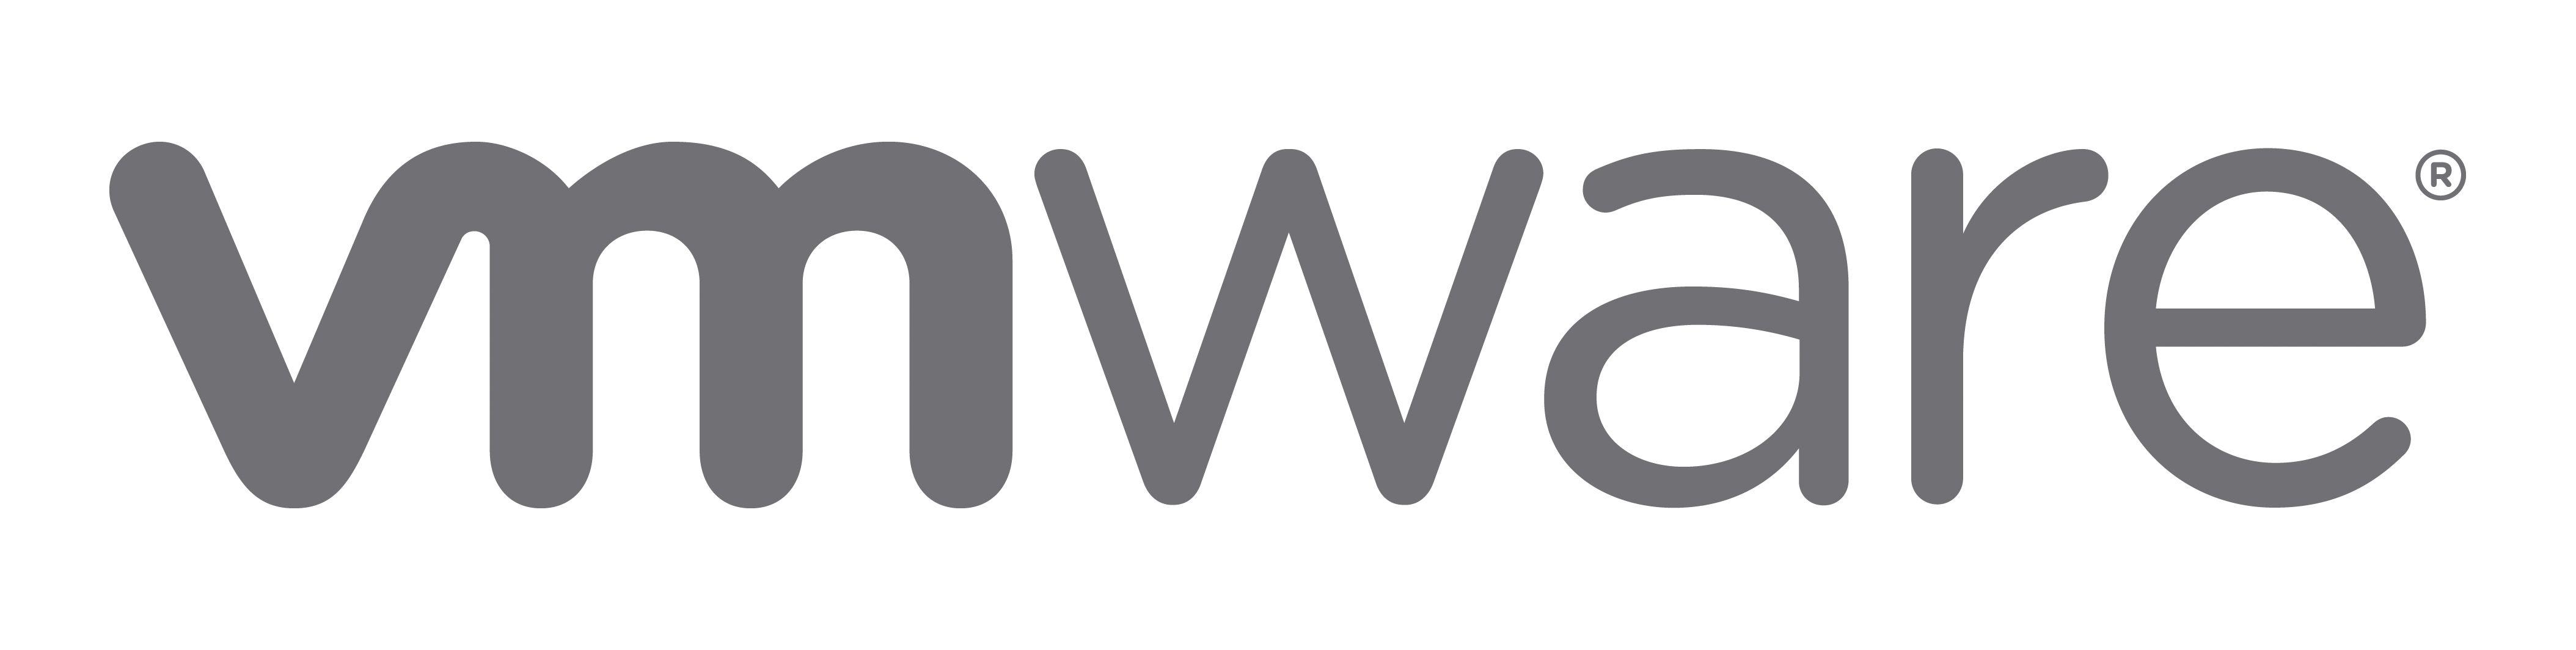 Grey Company Logo - VMware Inc. Down 19% On Low Guidance, Downgrades